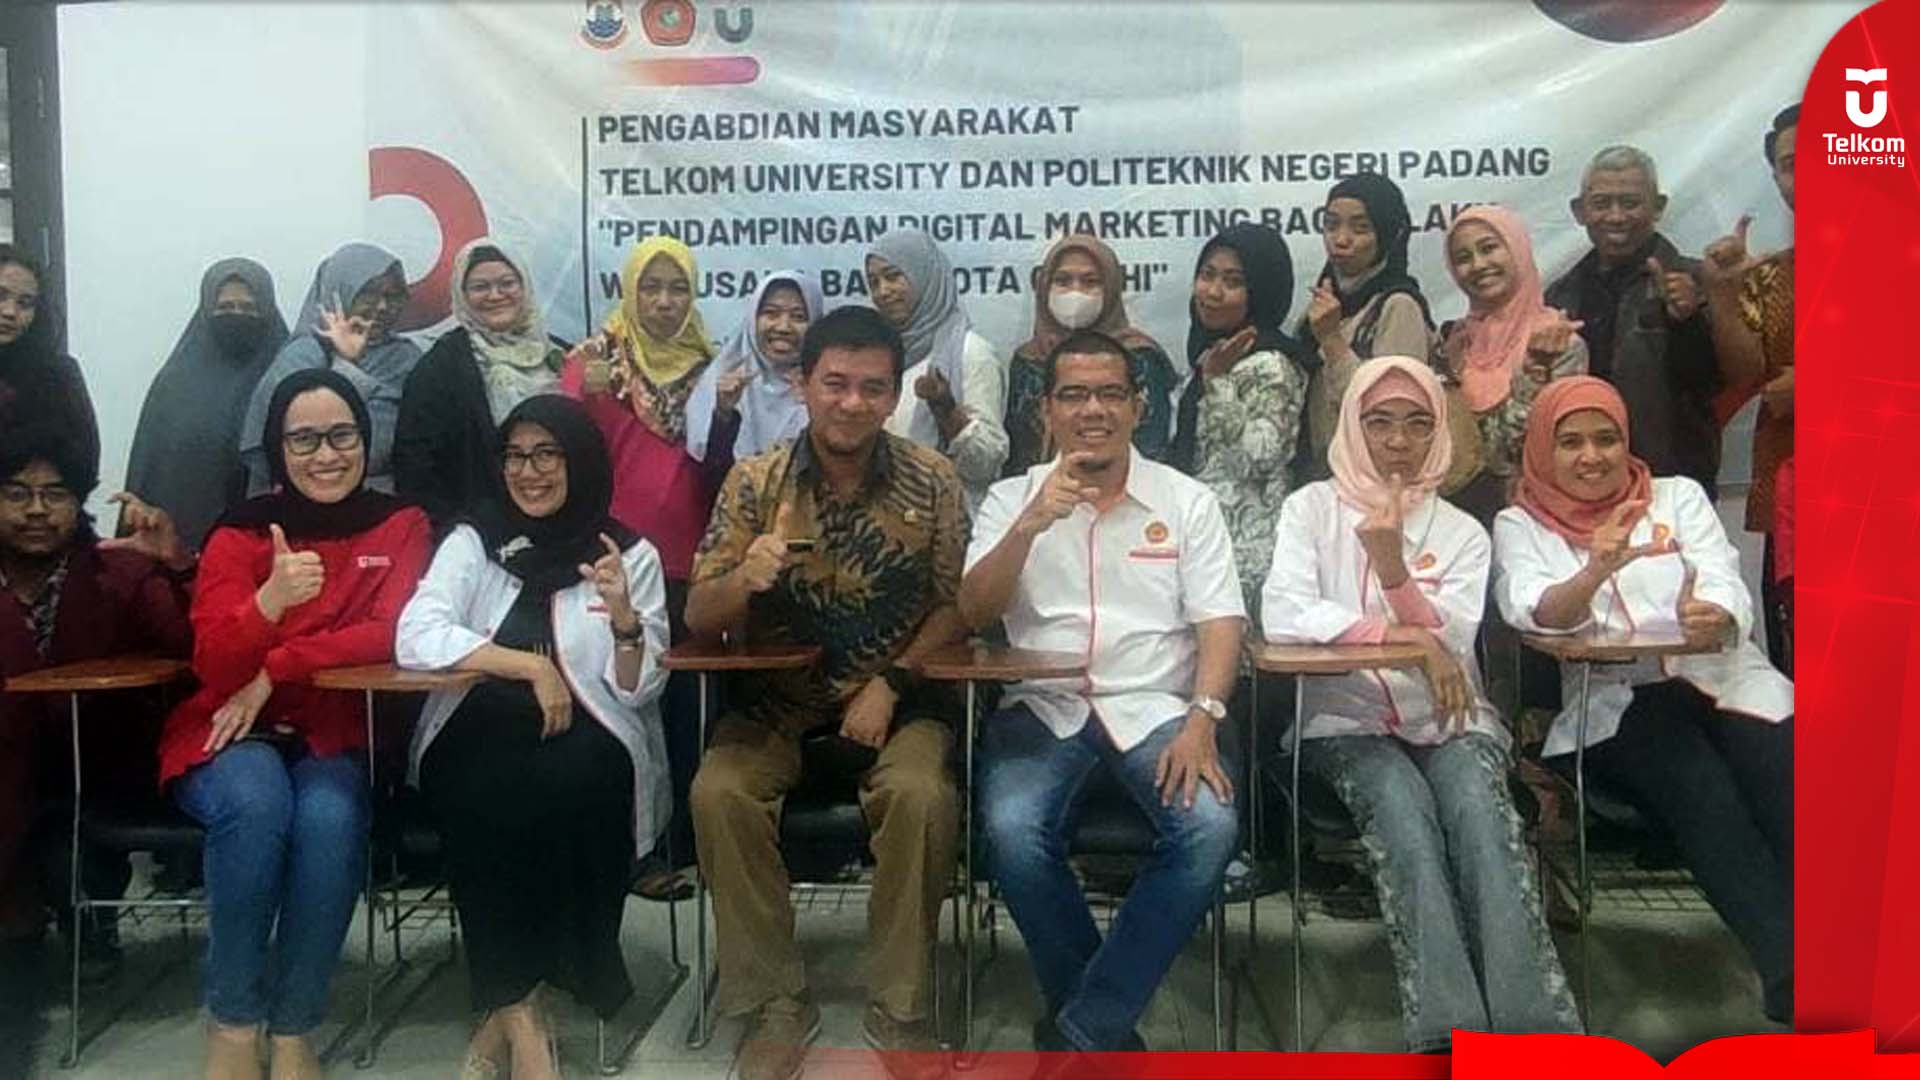 Telkom University and Padang State Polytechnic, Organize Digital Marketing Assistance